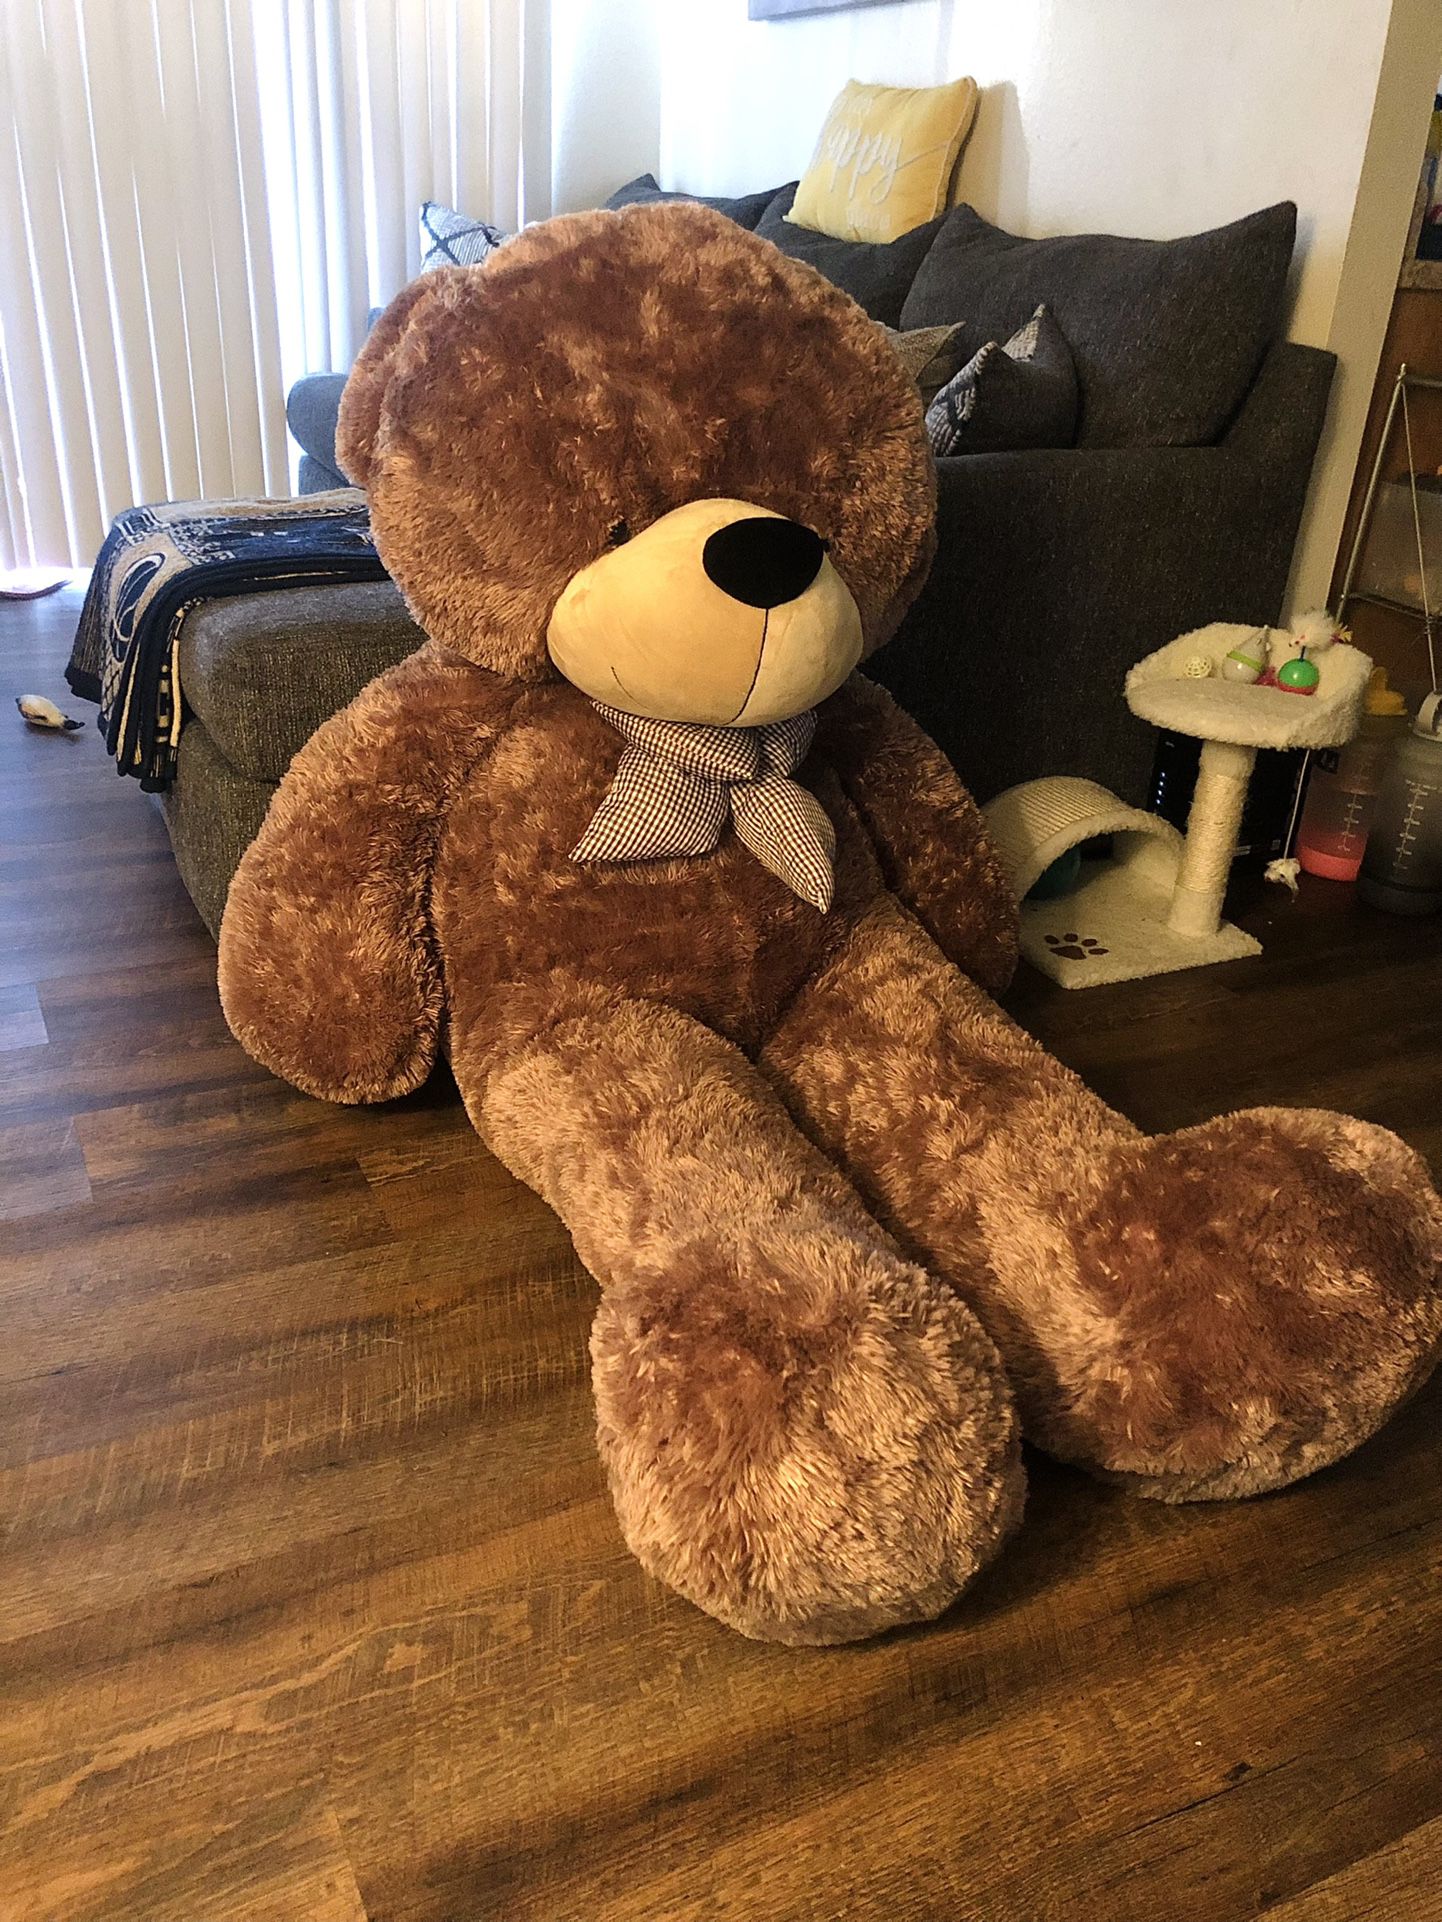 Giant Teddy Bear - Premium Quality Giant Stuffed Teddy Bear (78 inches, 6.5 feet tall)